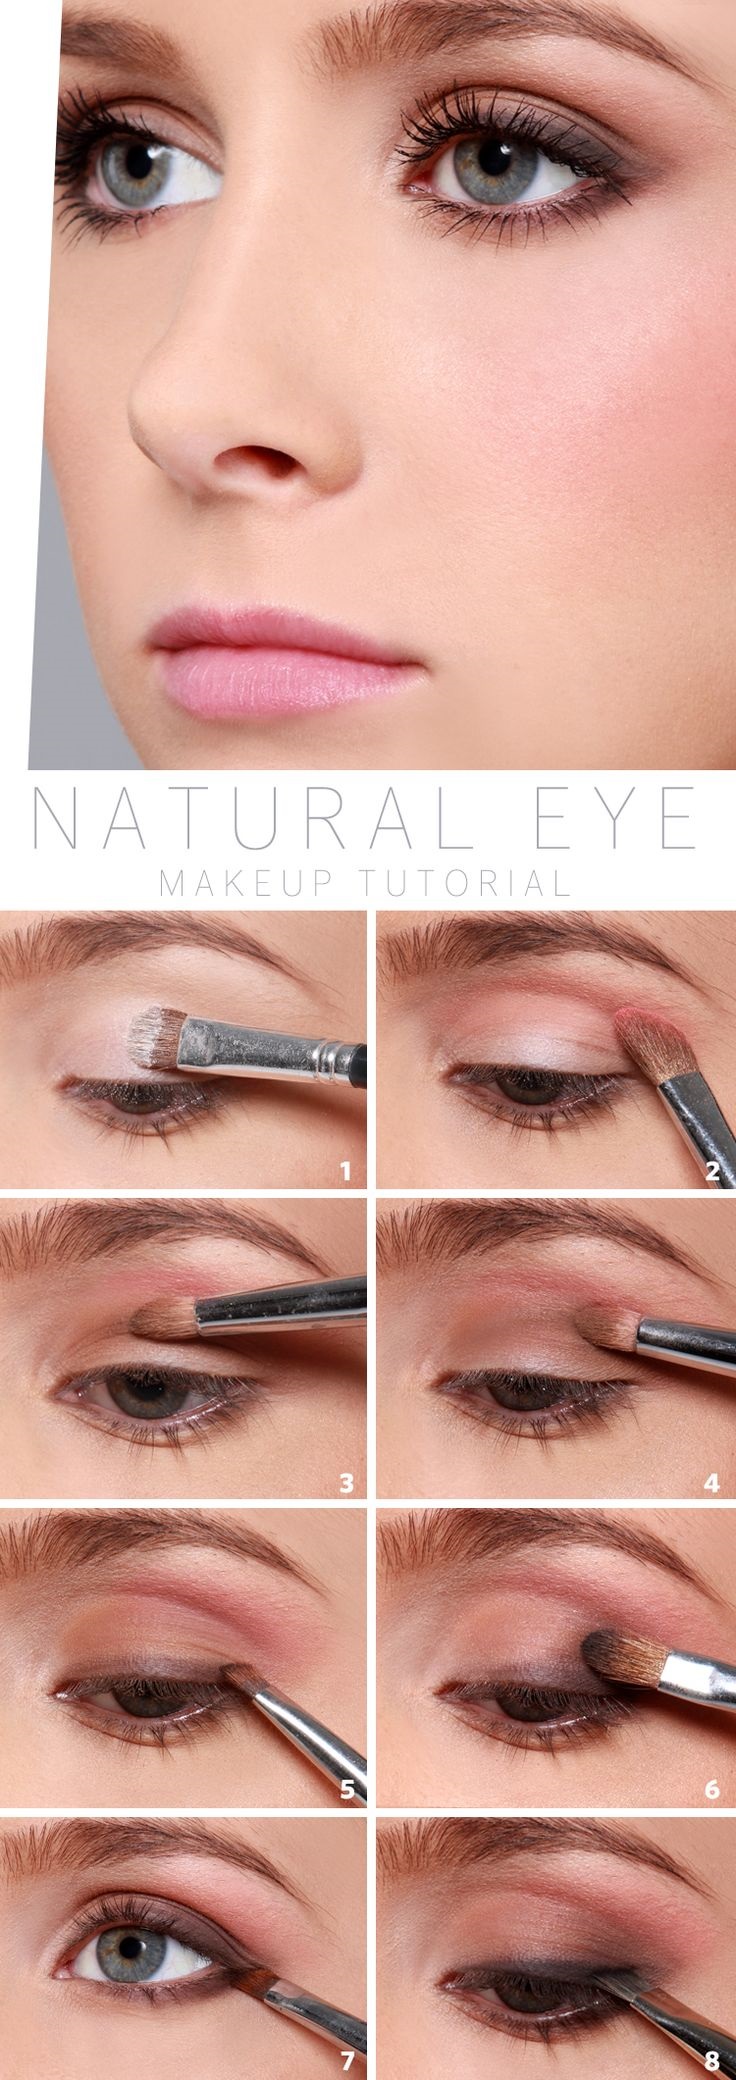 eyes natural Eye Natural makeup  Tutorial Makeup